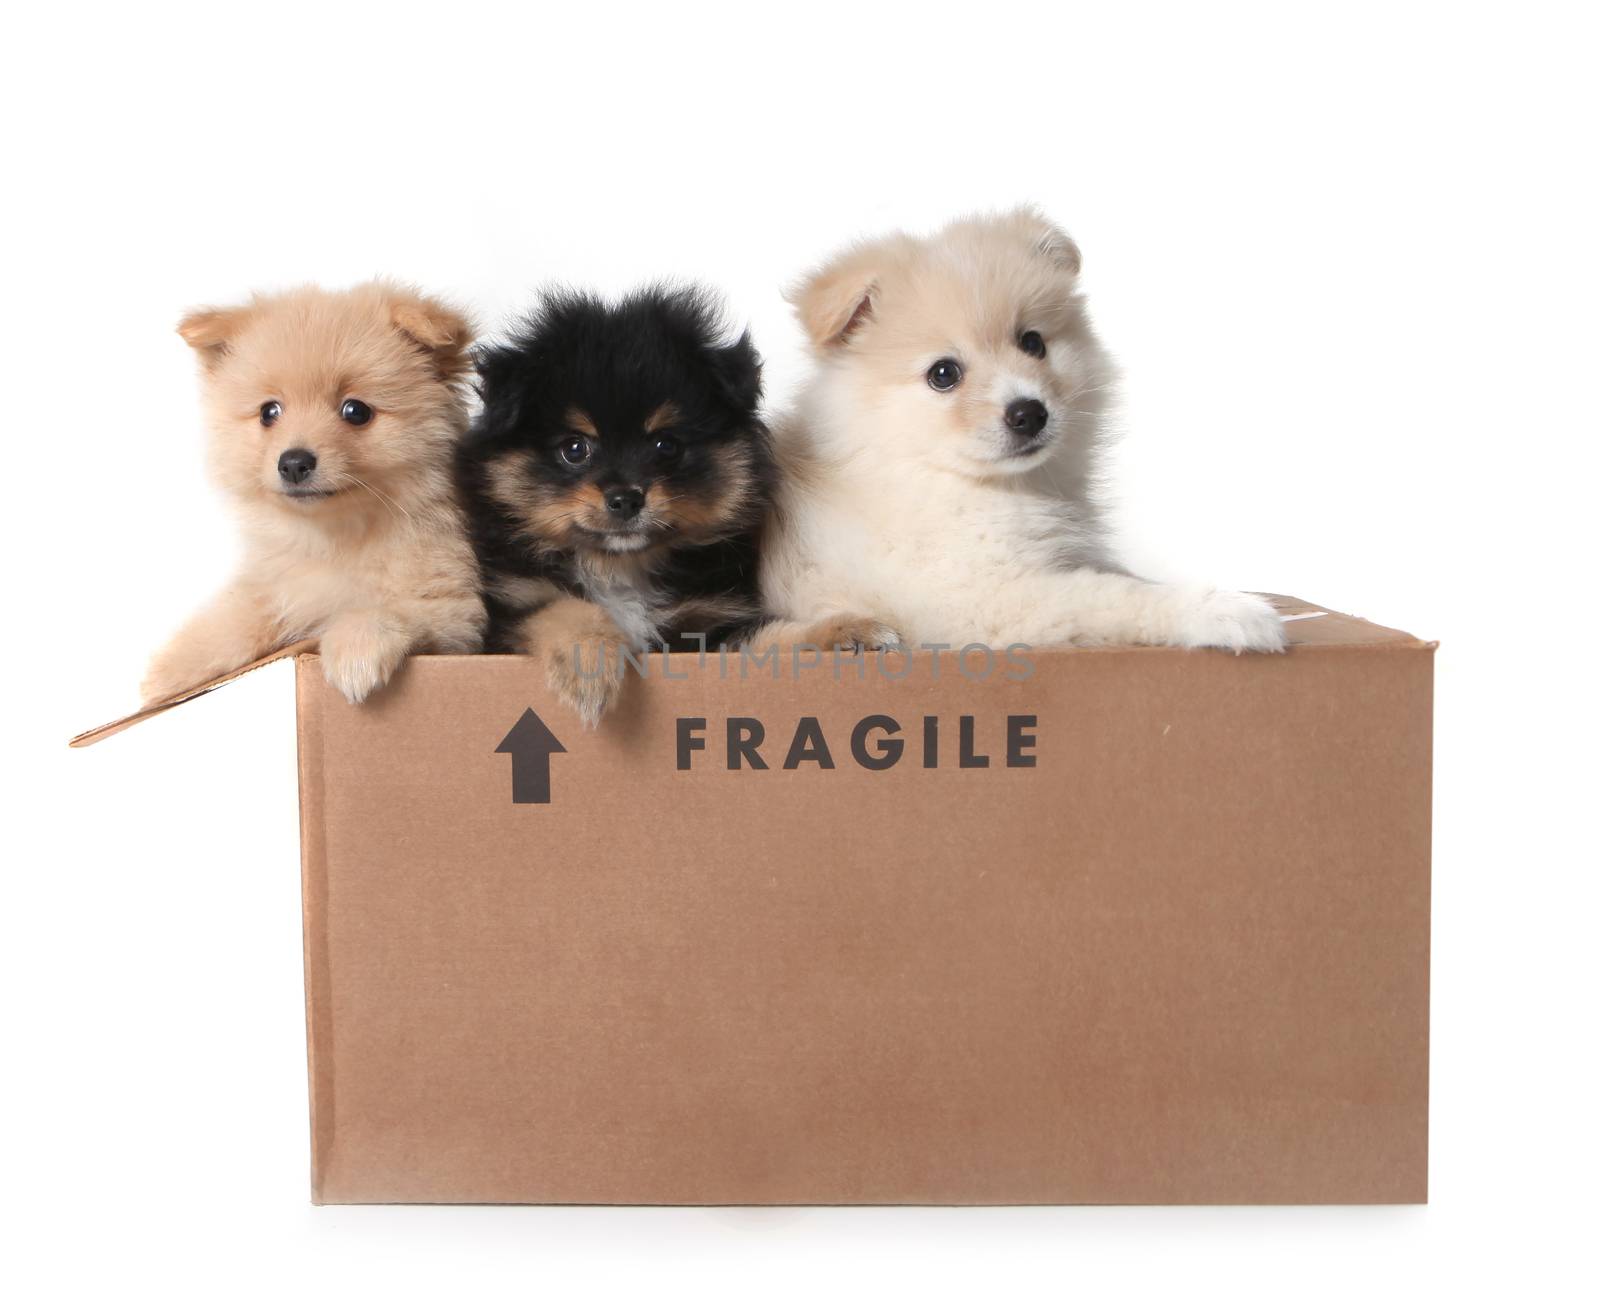 Adorable Pomeranian Puppies in a Cardboard Box  by tobkatrina